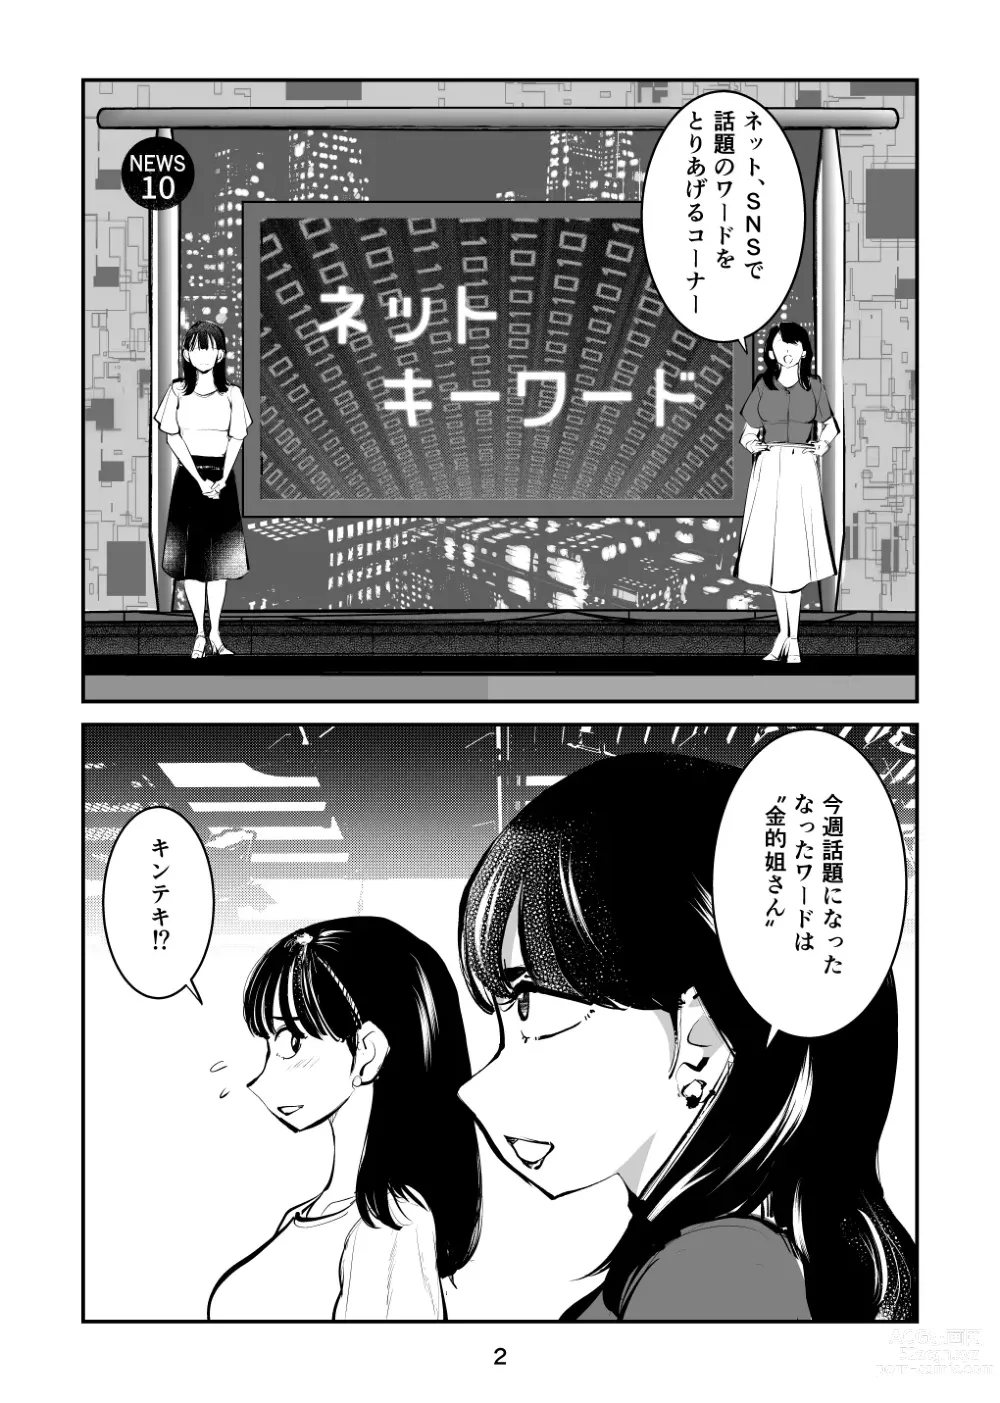 Page 2 of doujinshi Kinkeri onna keiji ryōko